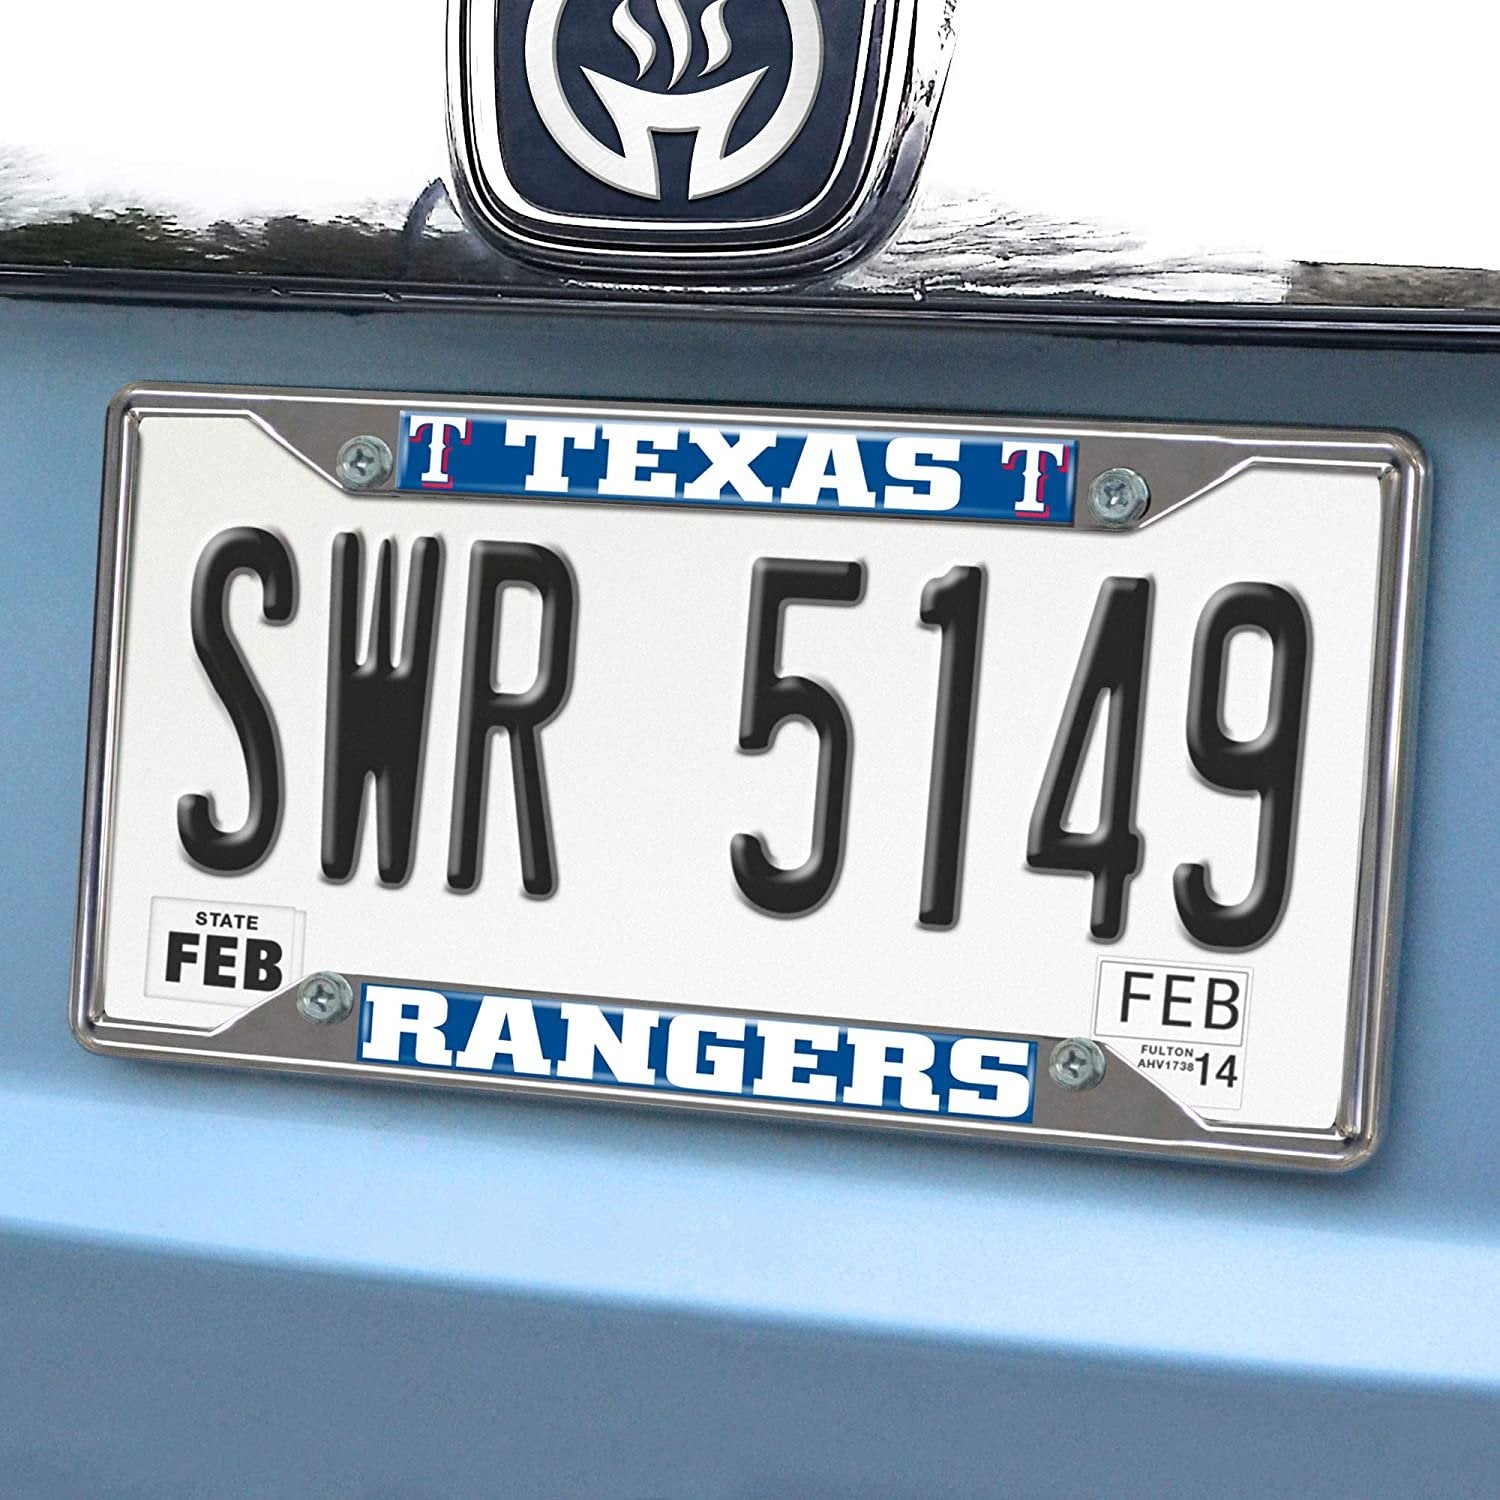 Texas Rangers Metal License Plate Frame Chrome Tag Cover, 12x6 Inch